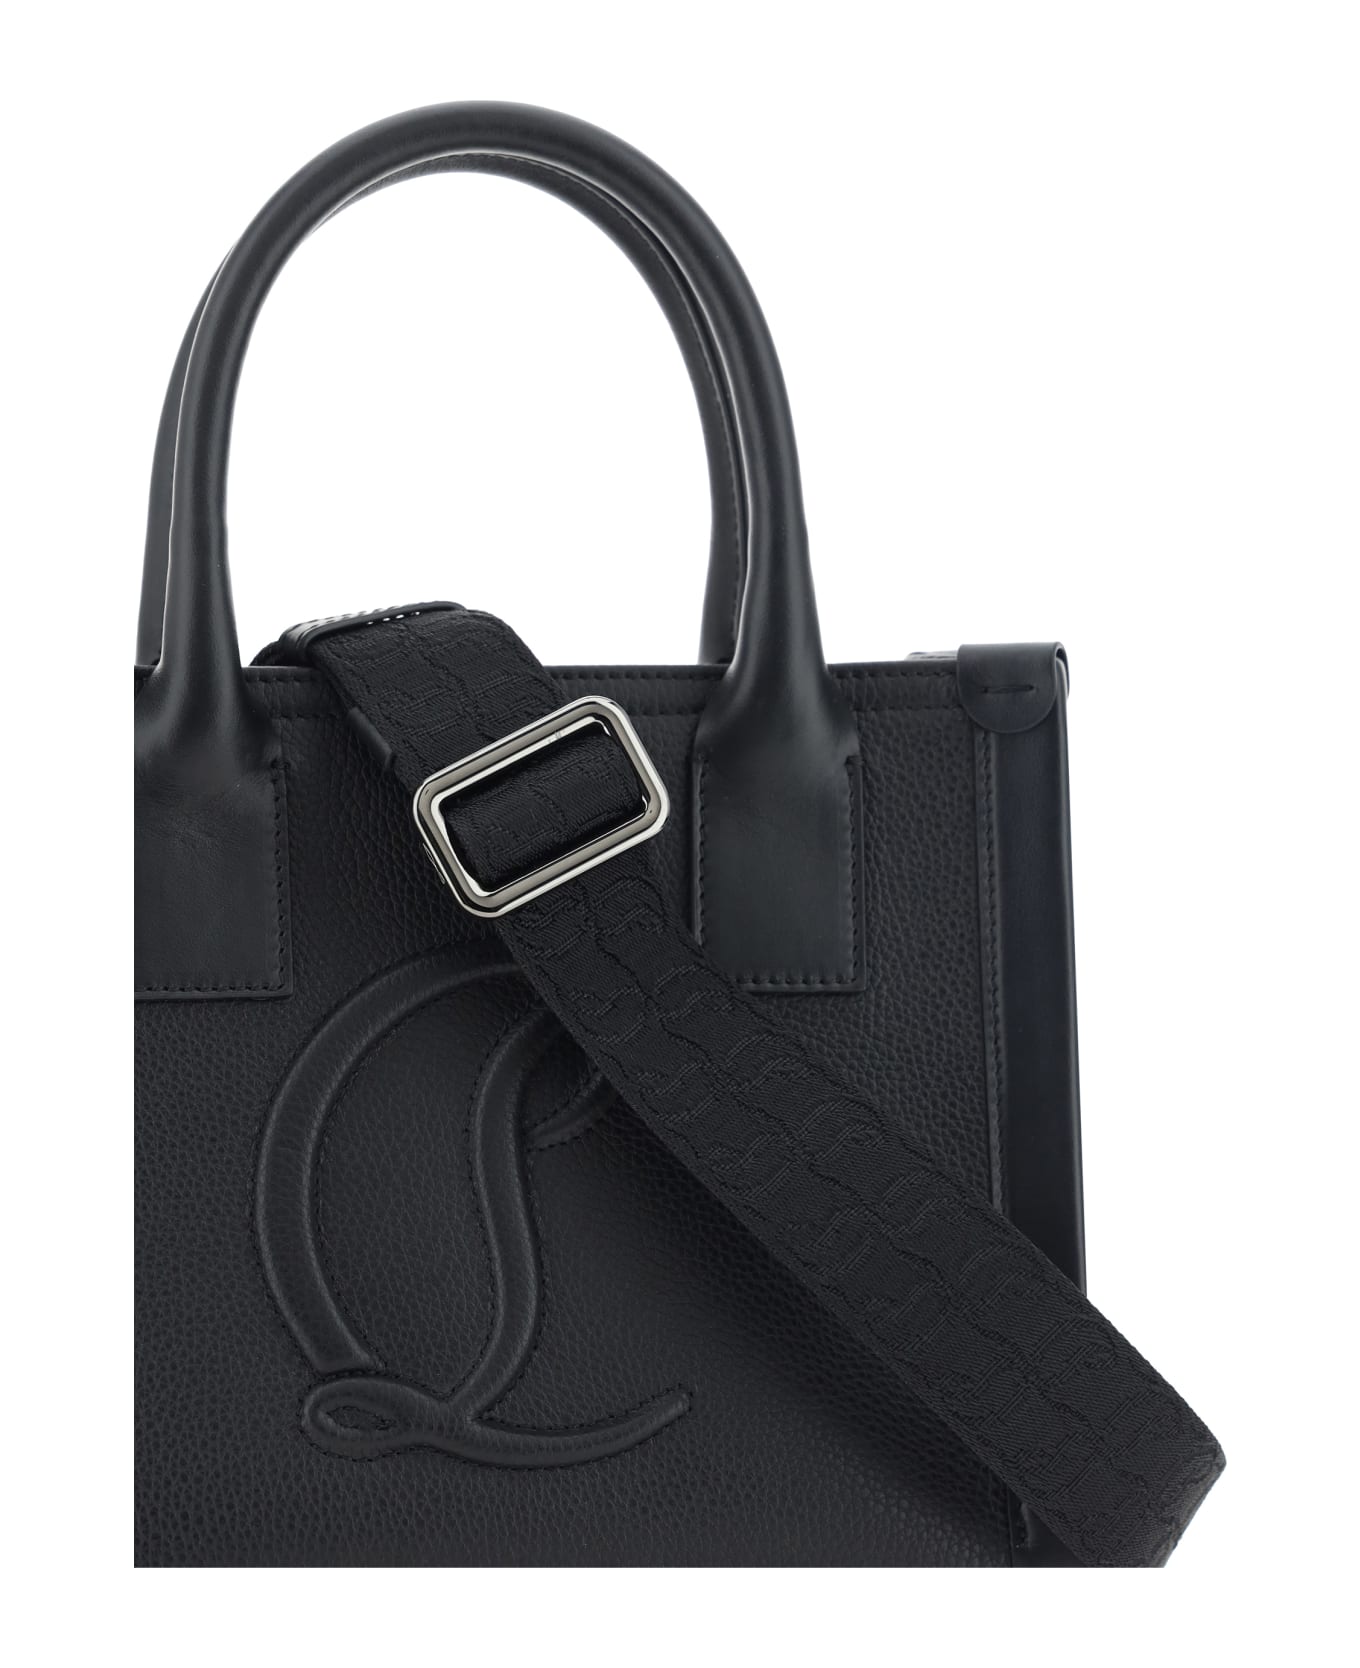 Christian Louboutin By My Side Handbag - Black/black/black